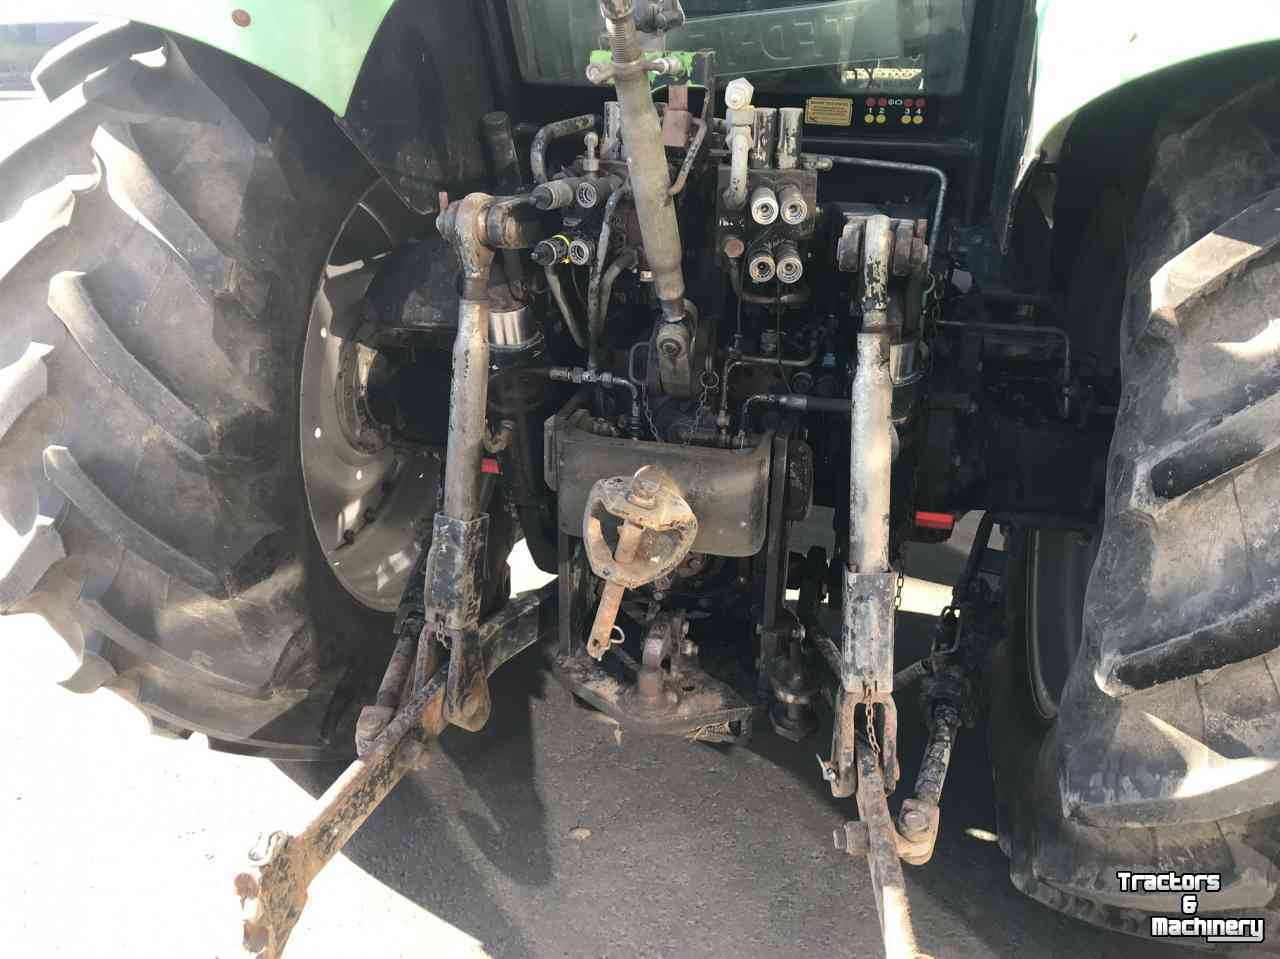 Tractors Deutz-Fahr Agrotron 106